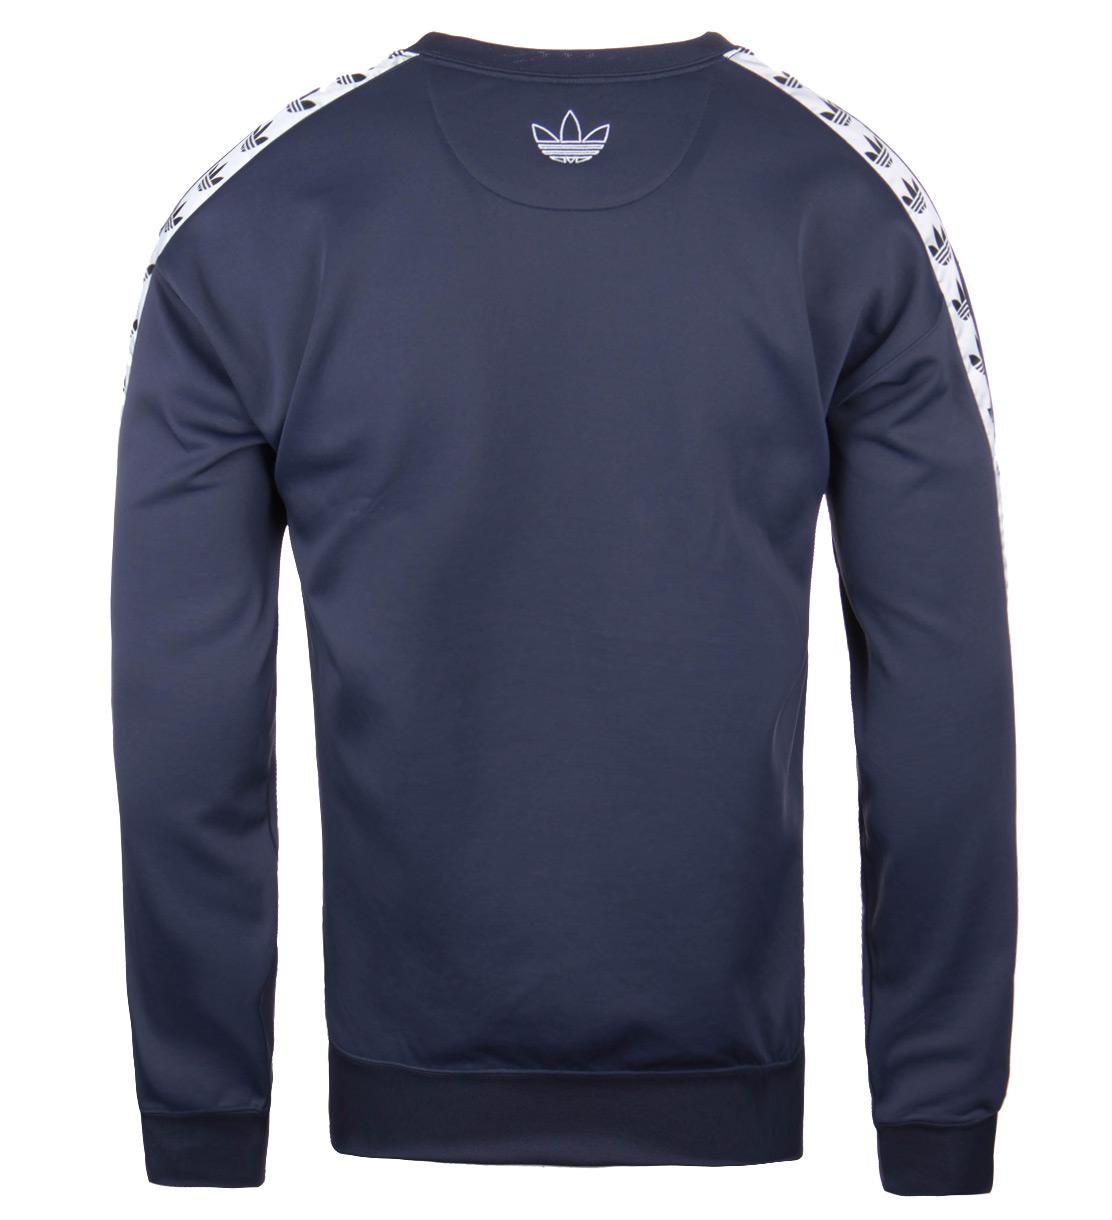 adidas Originals Cotton Adidas Tnt Tape Navy Crew Neck Sweatshirt in Blue  for Men - Lyst